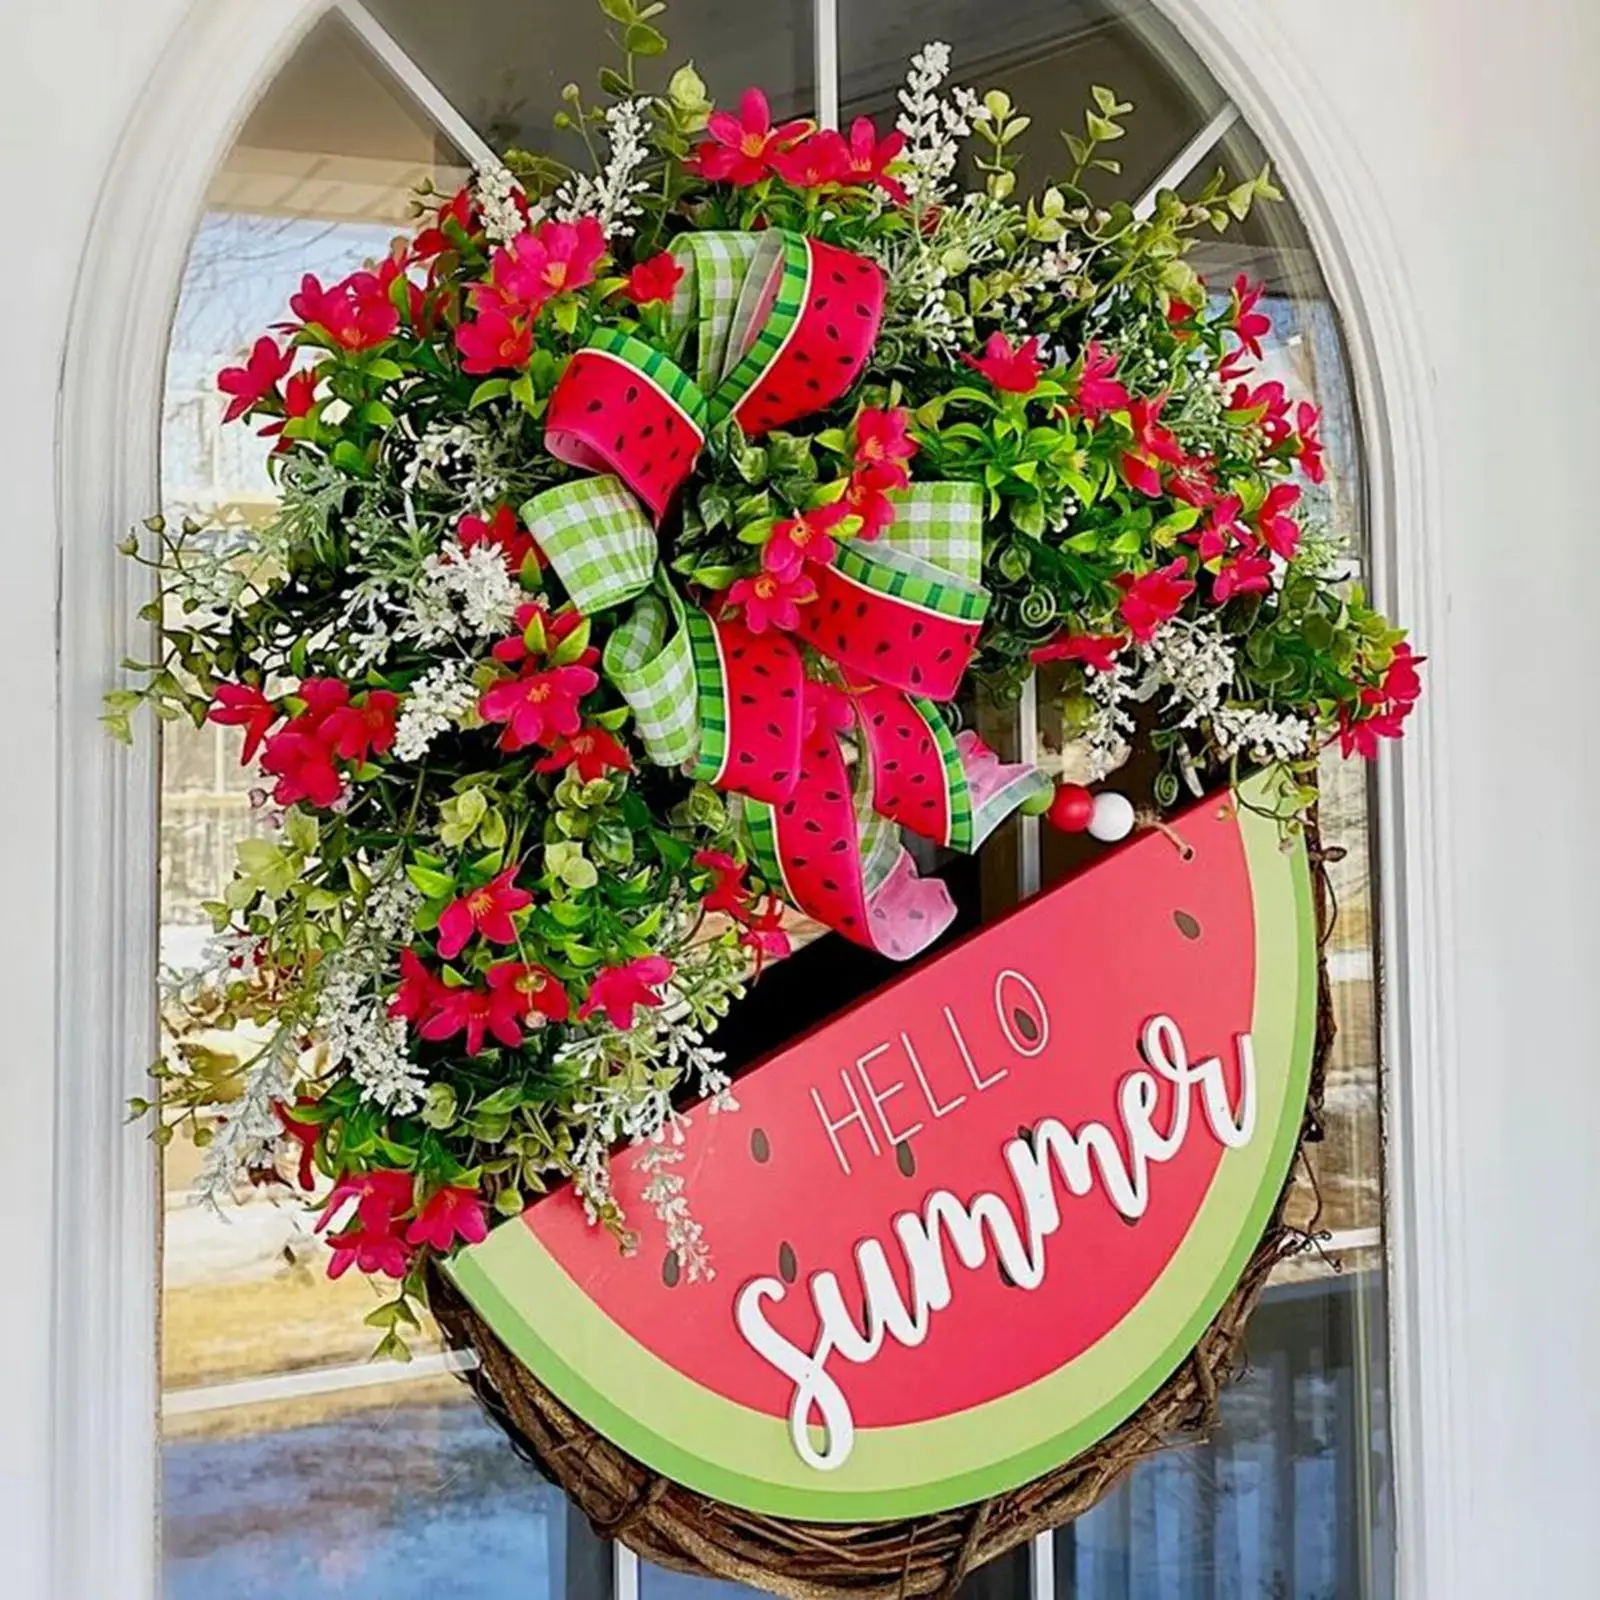 Summer Watermelon Door Sign Artificial Flower Wreath Garland Hanging Sign Plaque Watermelon Wreath for Wall Mantel Wedding Party